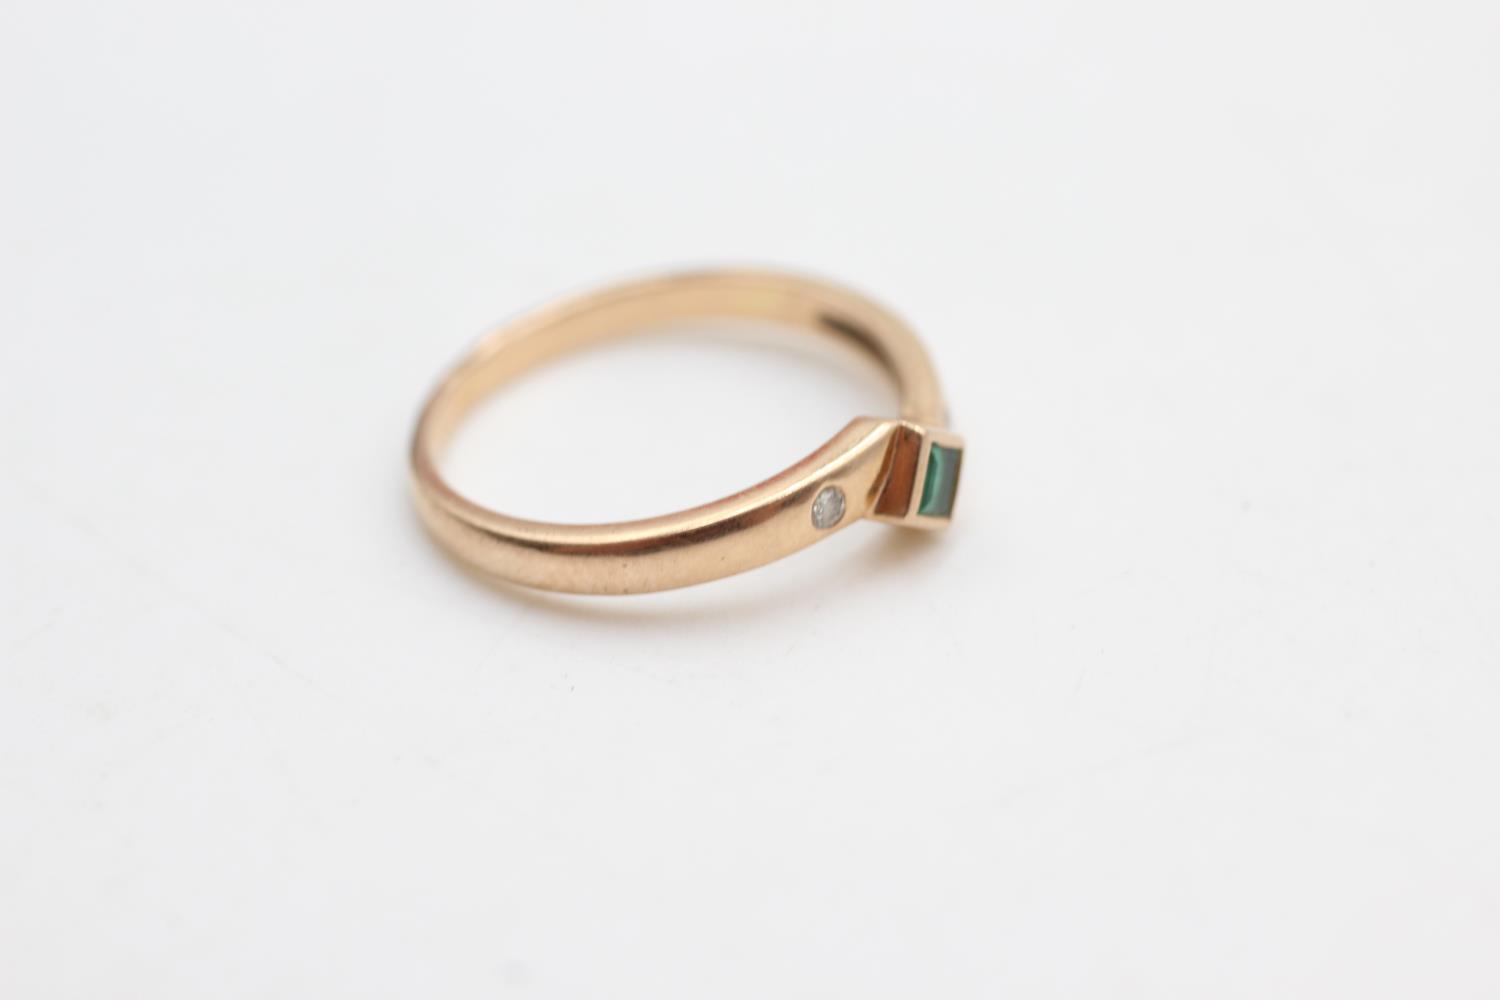 14ct gold diamond & emerald ring (1.3g) Size K - Image 2 of 4